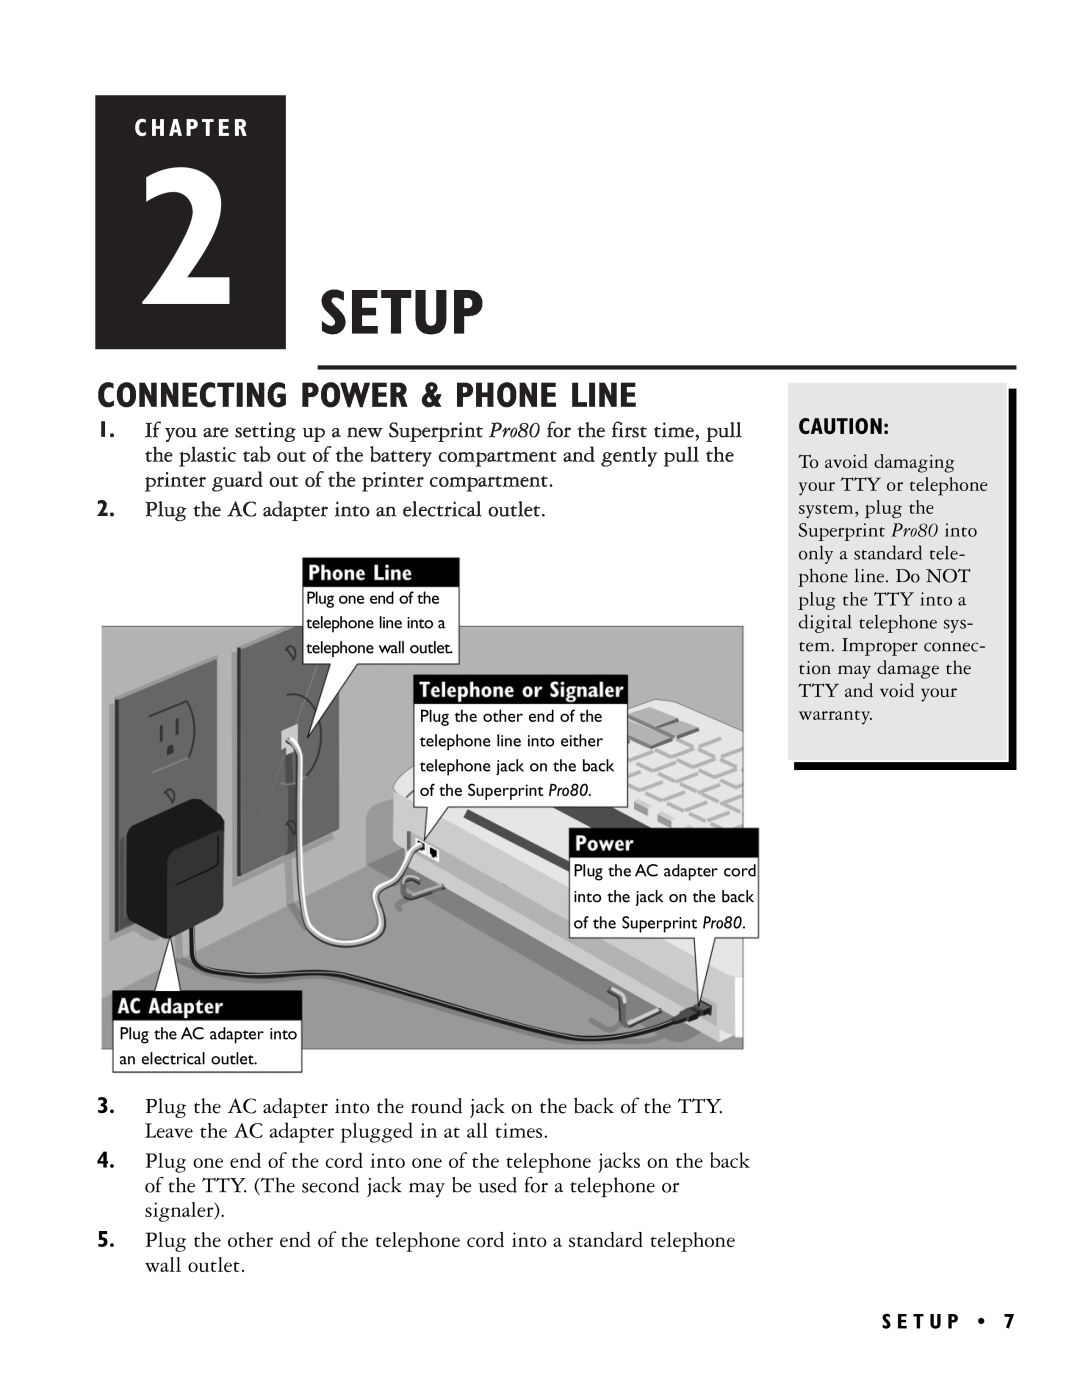 Ultratec PRO80TM manual Setup, Connecting Power & Phone Line, C H A P T E R 